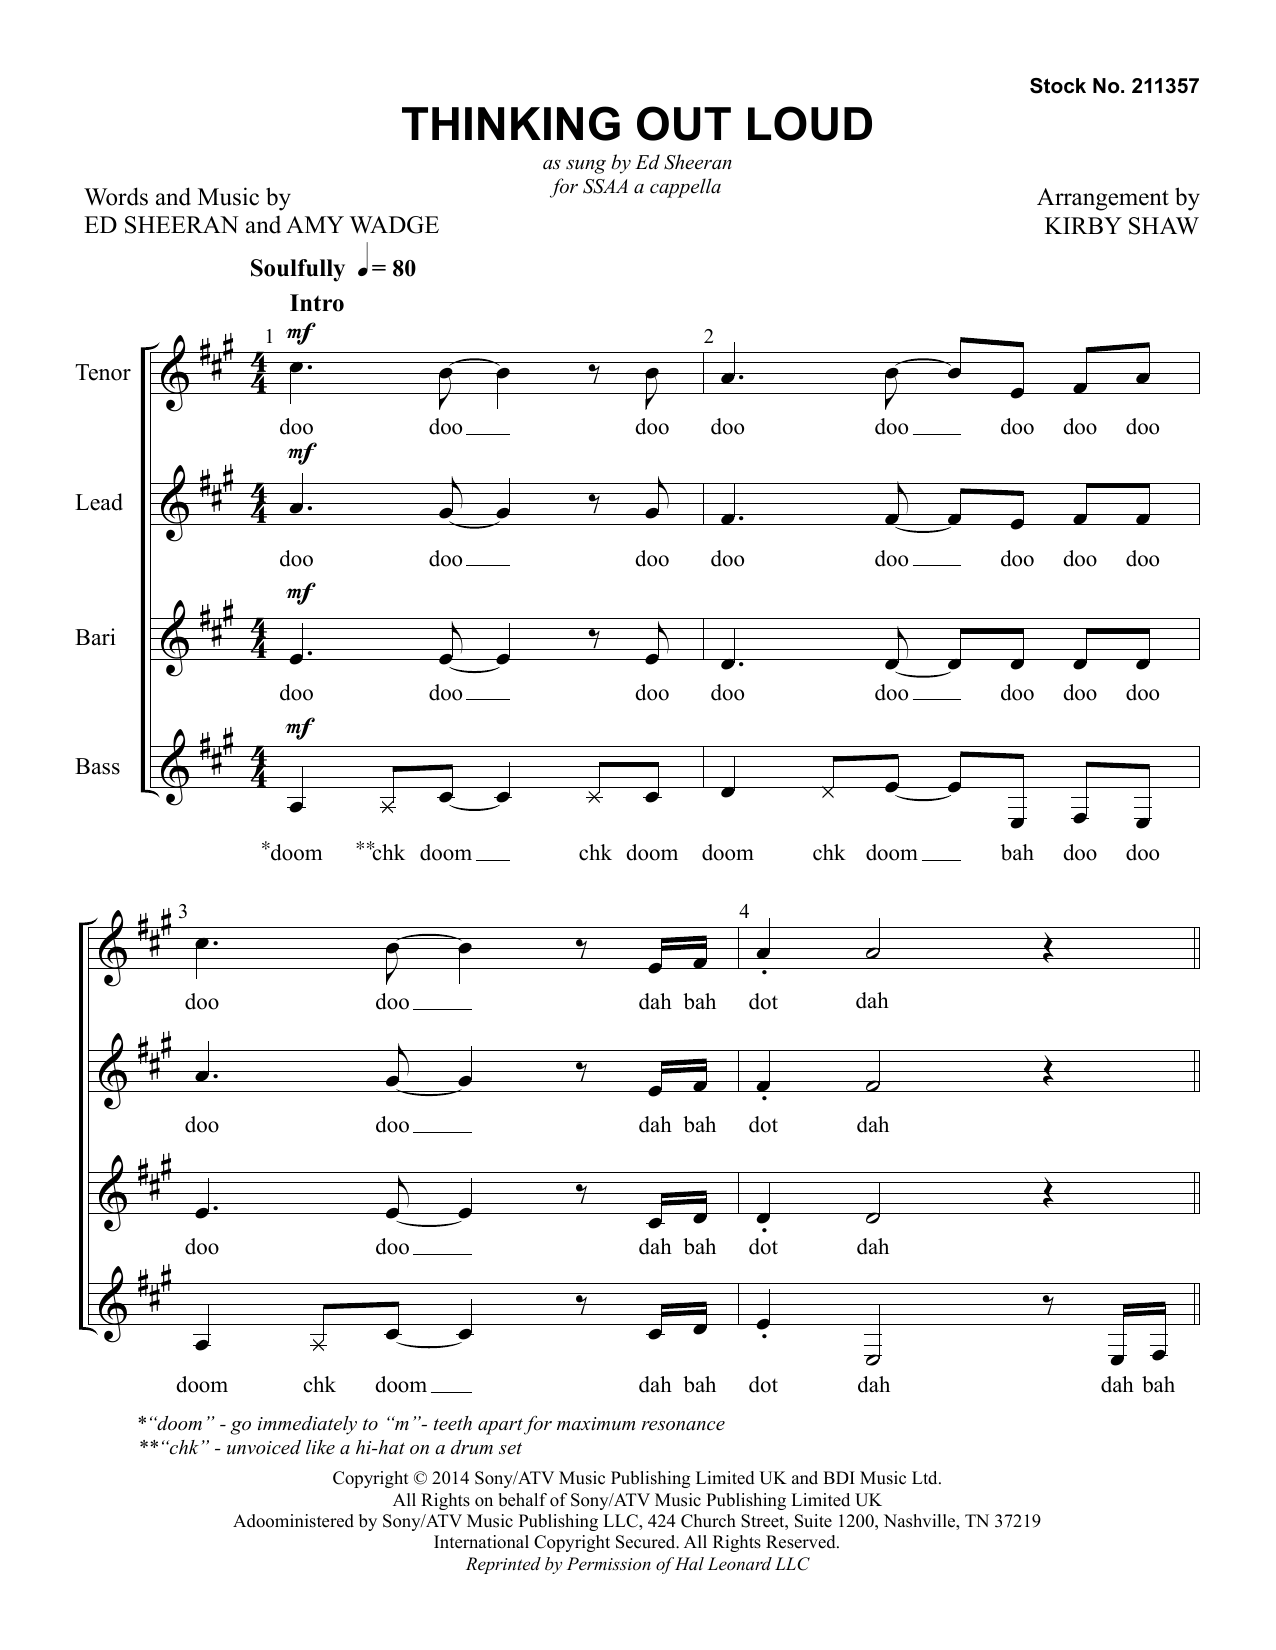 Ed Sheeran Thinking Out Loud (arr. Kirby Shaw) Sheet Music Notes & Chords for TTBB Choir - Download or Print PDF